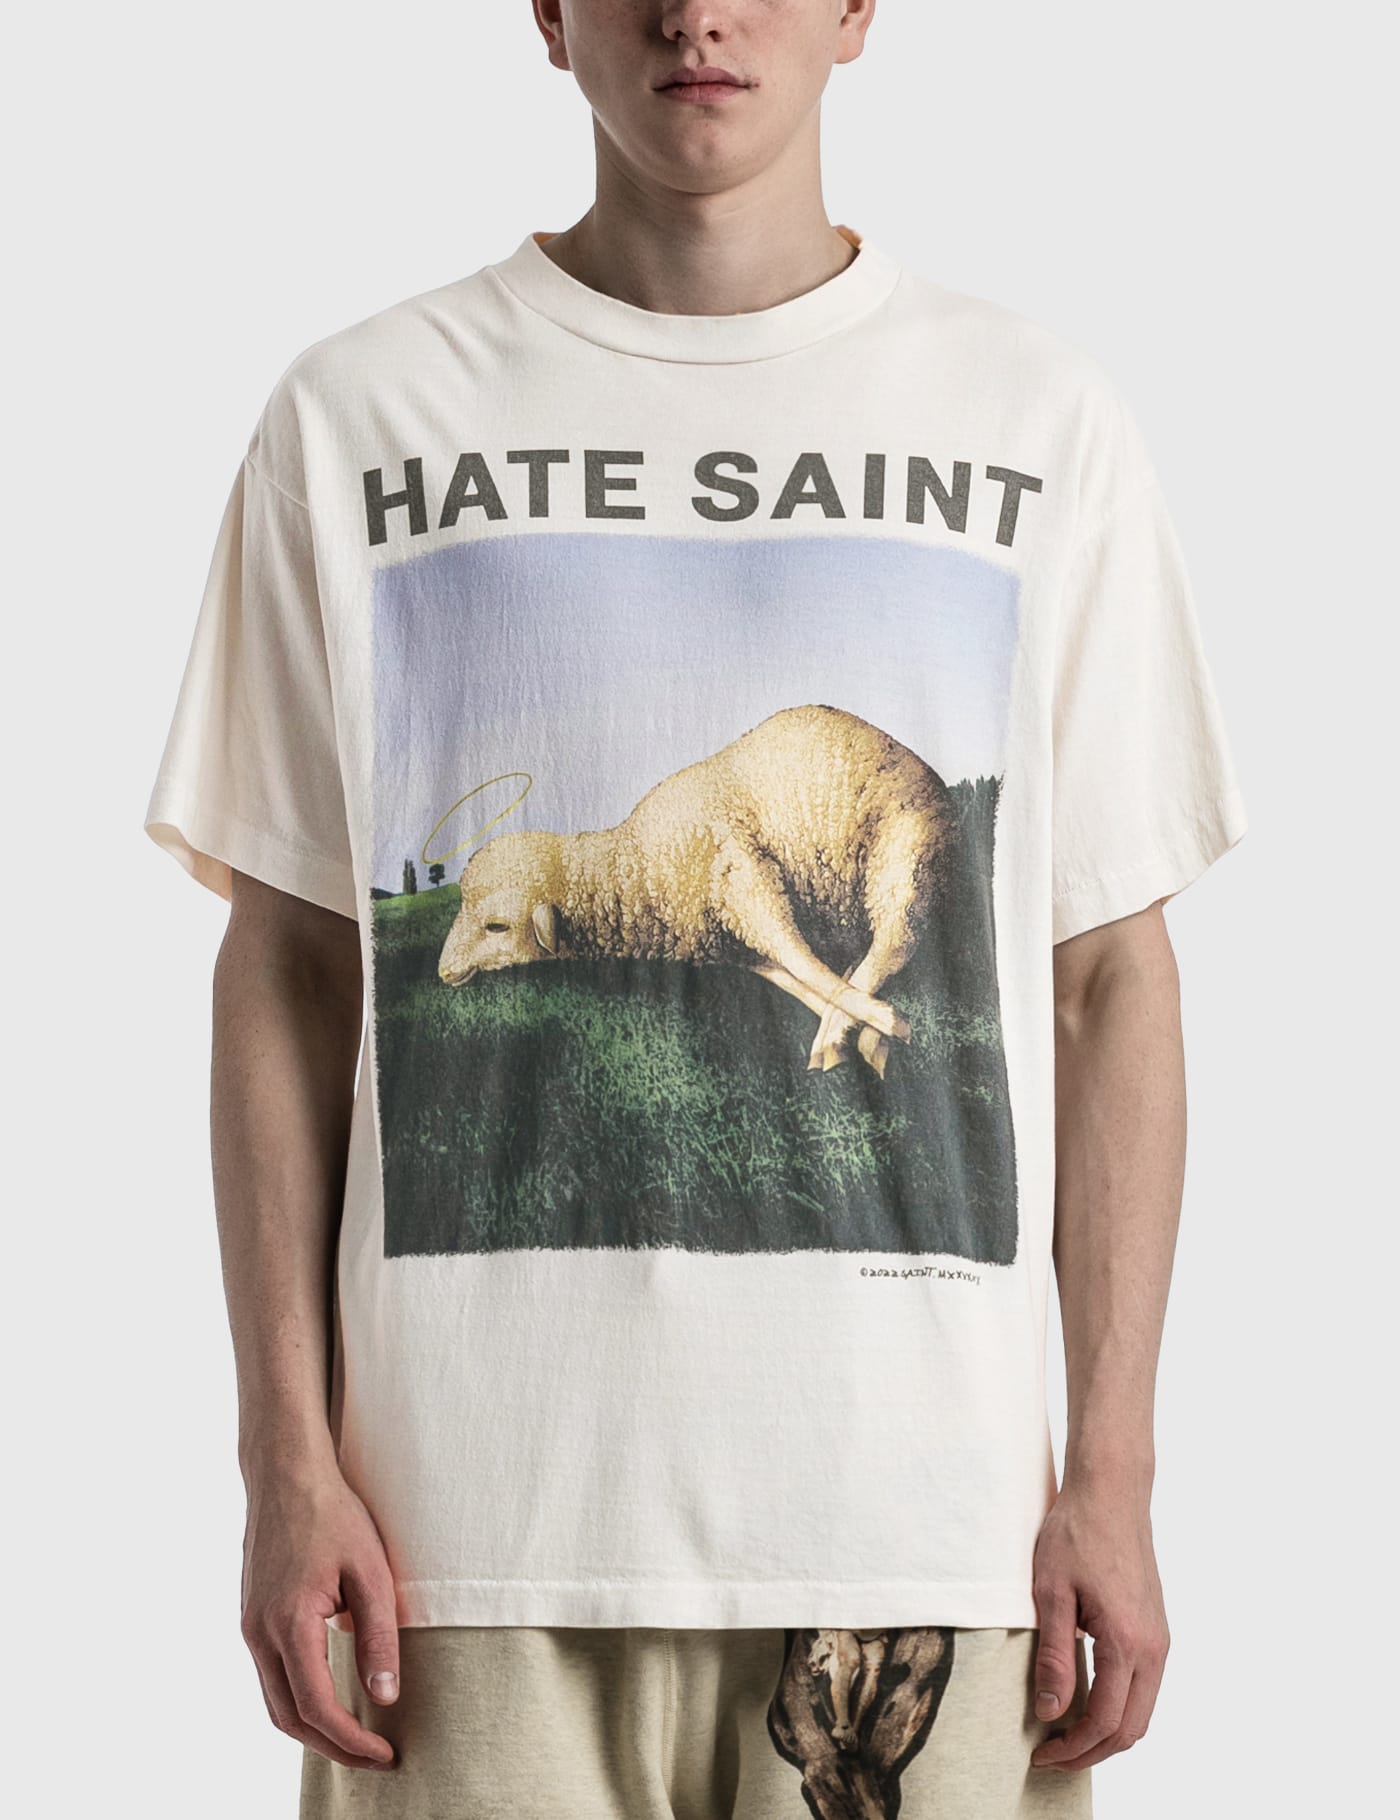 Saint Michael - Hate Sheep T-shirt | HBX - Globally Curated 